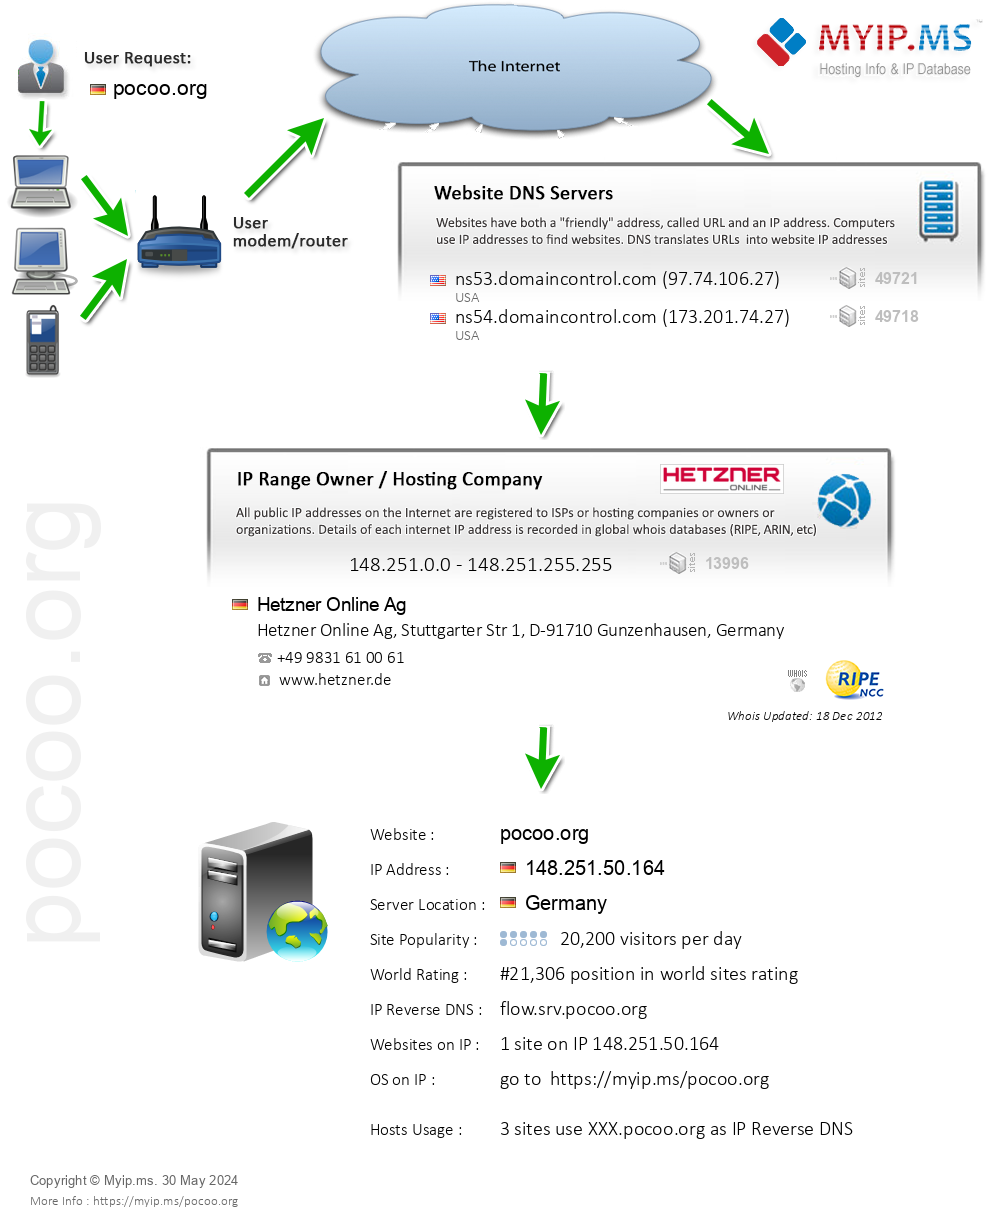 Pocoo.org - Website Hosting Visual IP Diagram